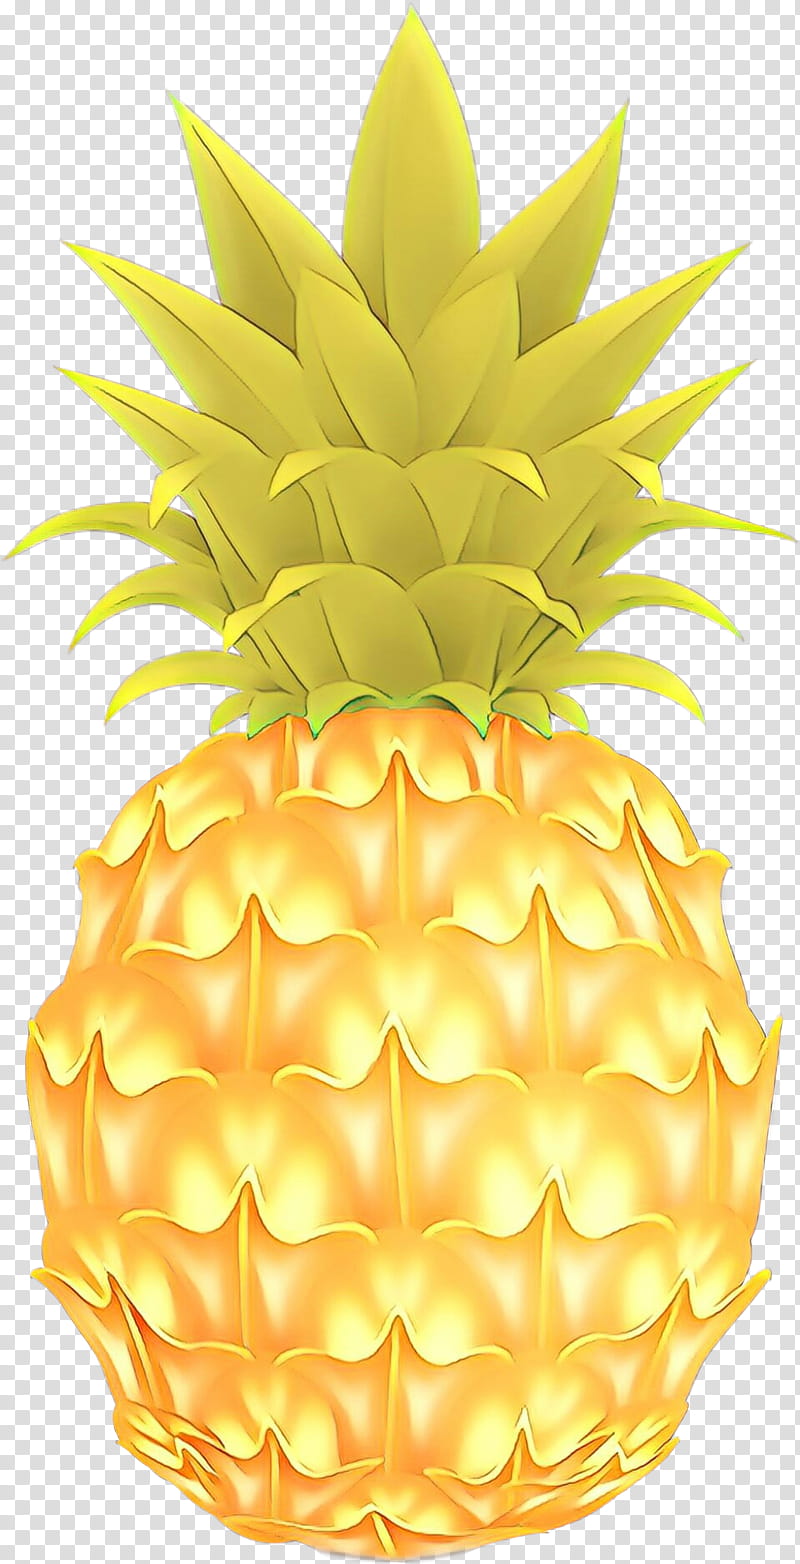 Fruit Juice, Cartoon, Pineapple, Pineapple Juice, Food, Drawing, Encapsulated PostScript, Pineapples transparent background PNG clipart